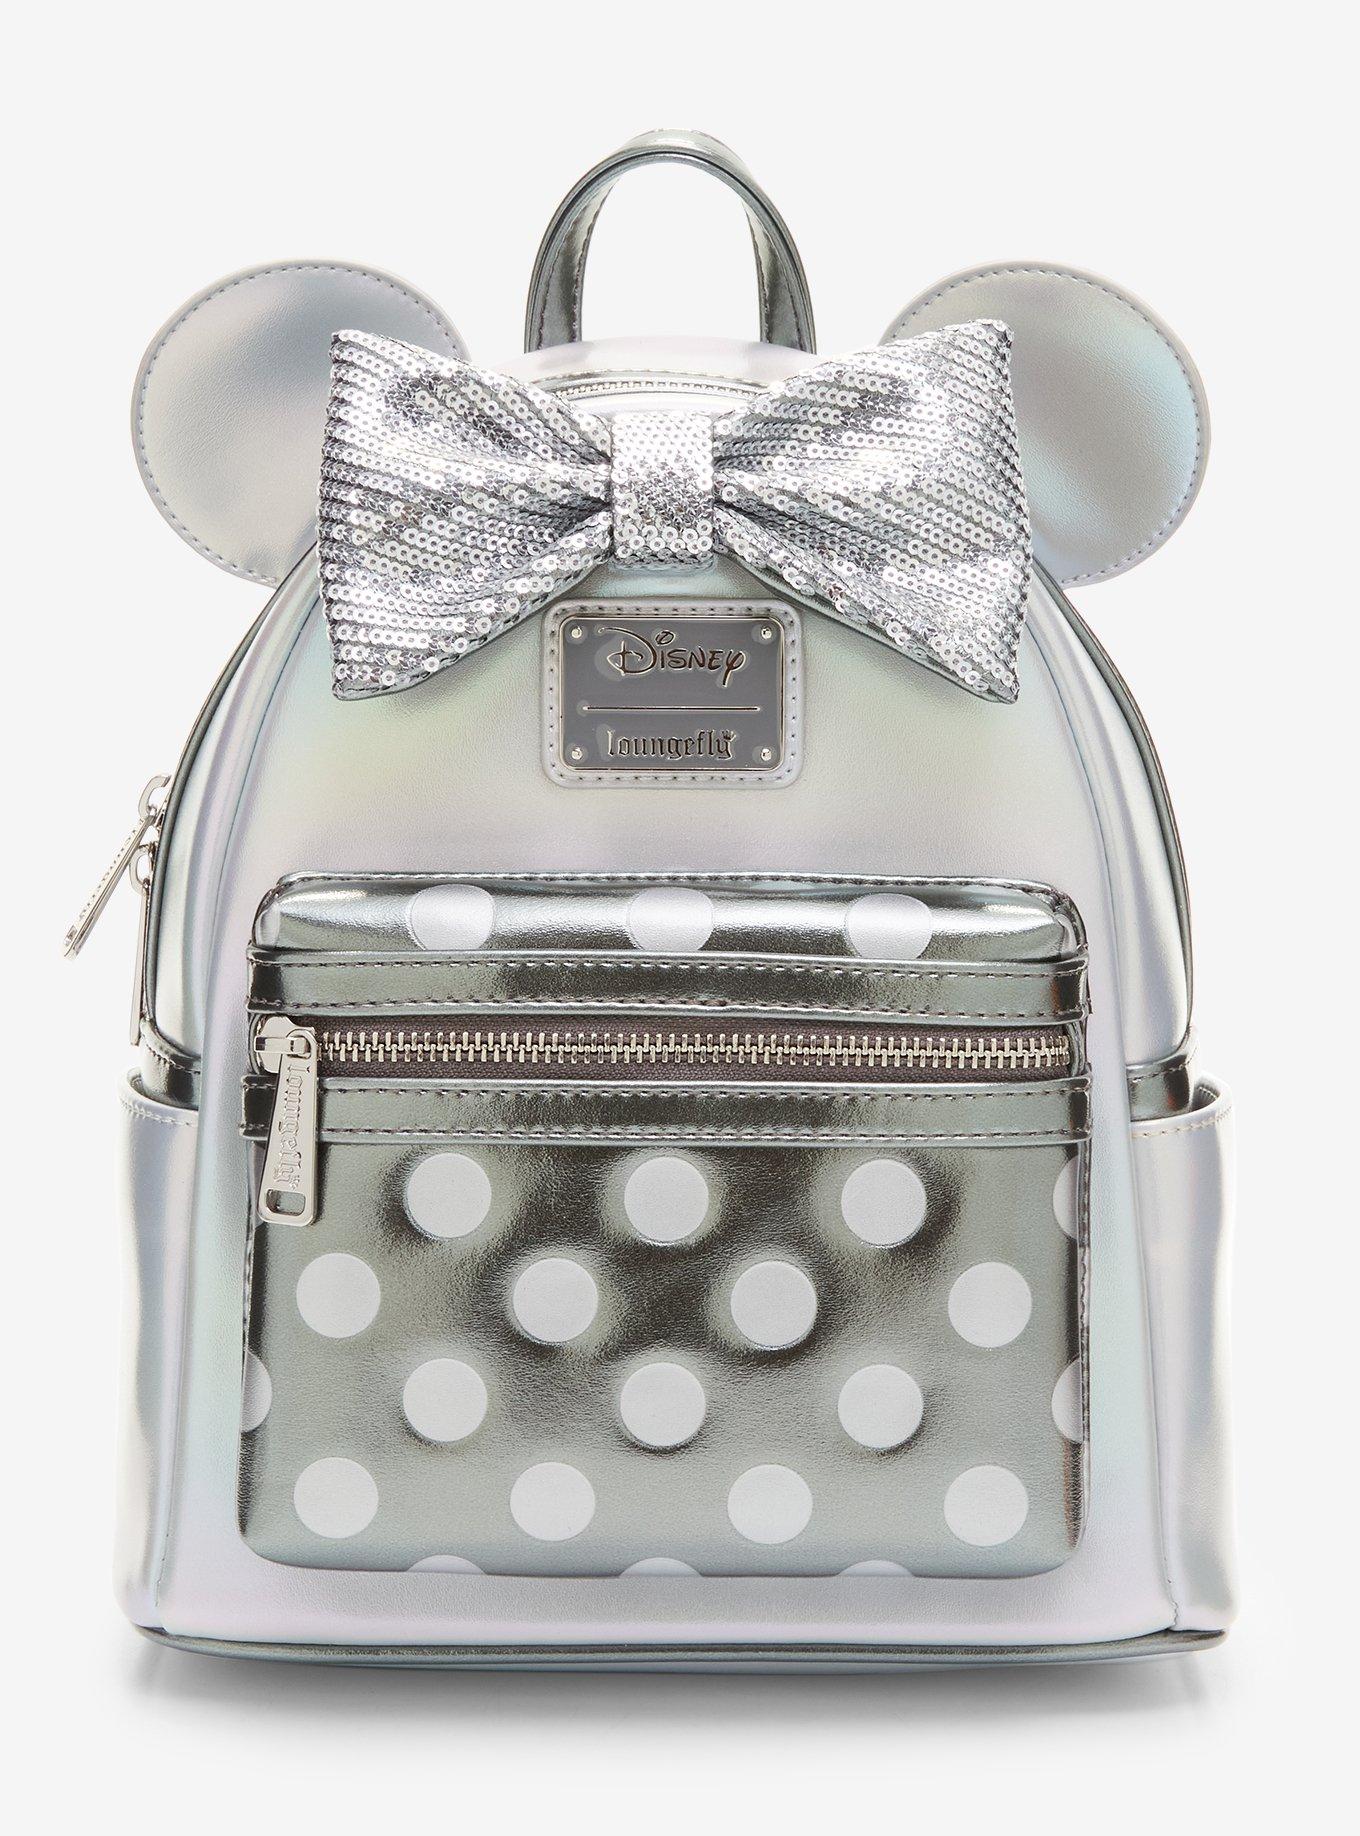 Loungefly Disney Bride of Frankenstein Minnie Mini Backpack